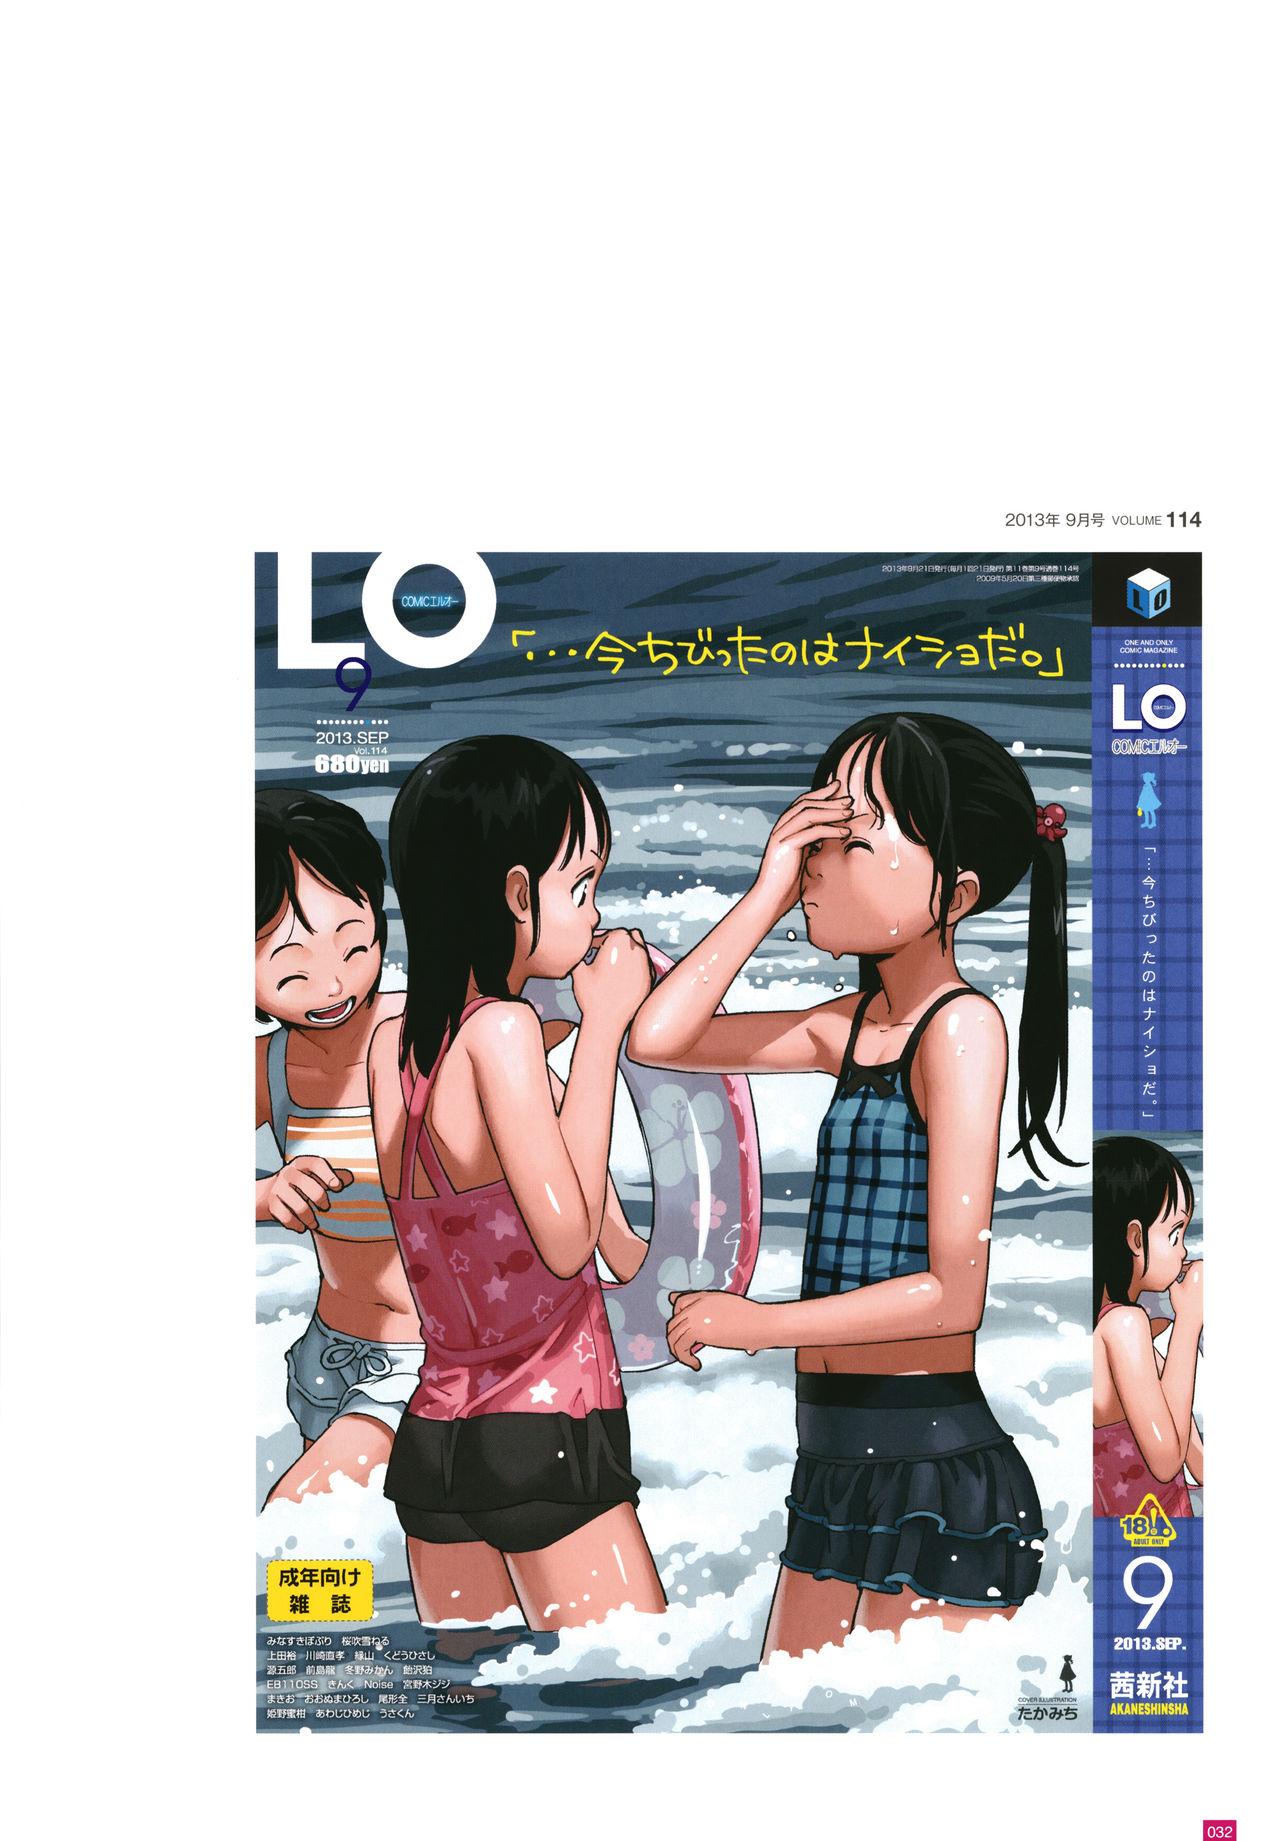 [Takamichi] LO Artbook 2-B TAKAMICHI LO-fi WORKS 34